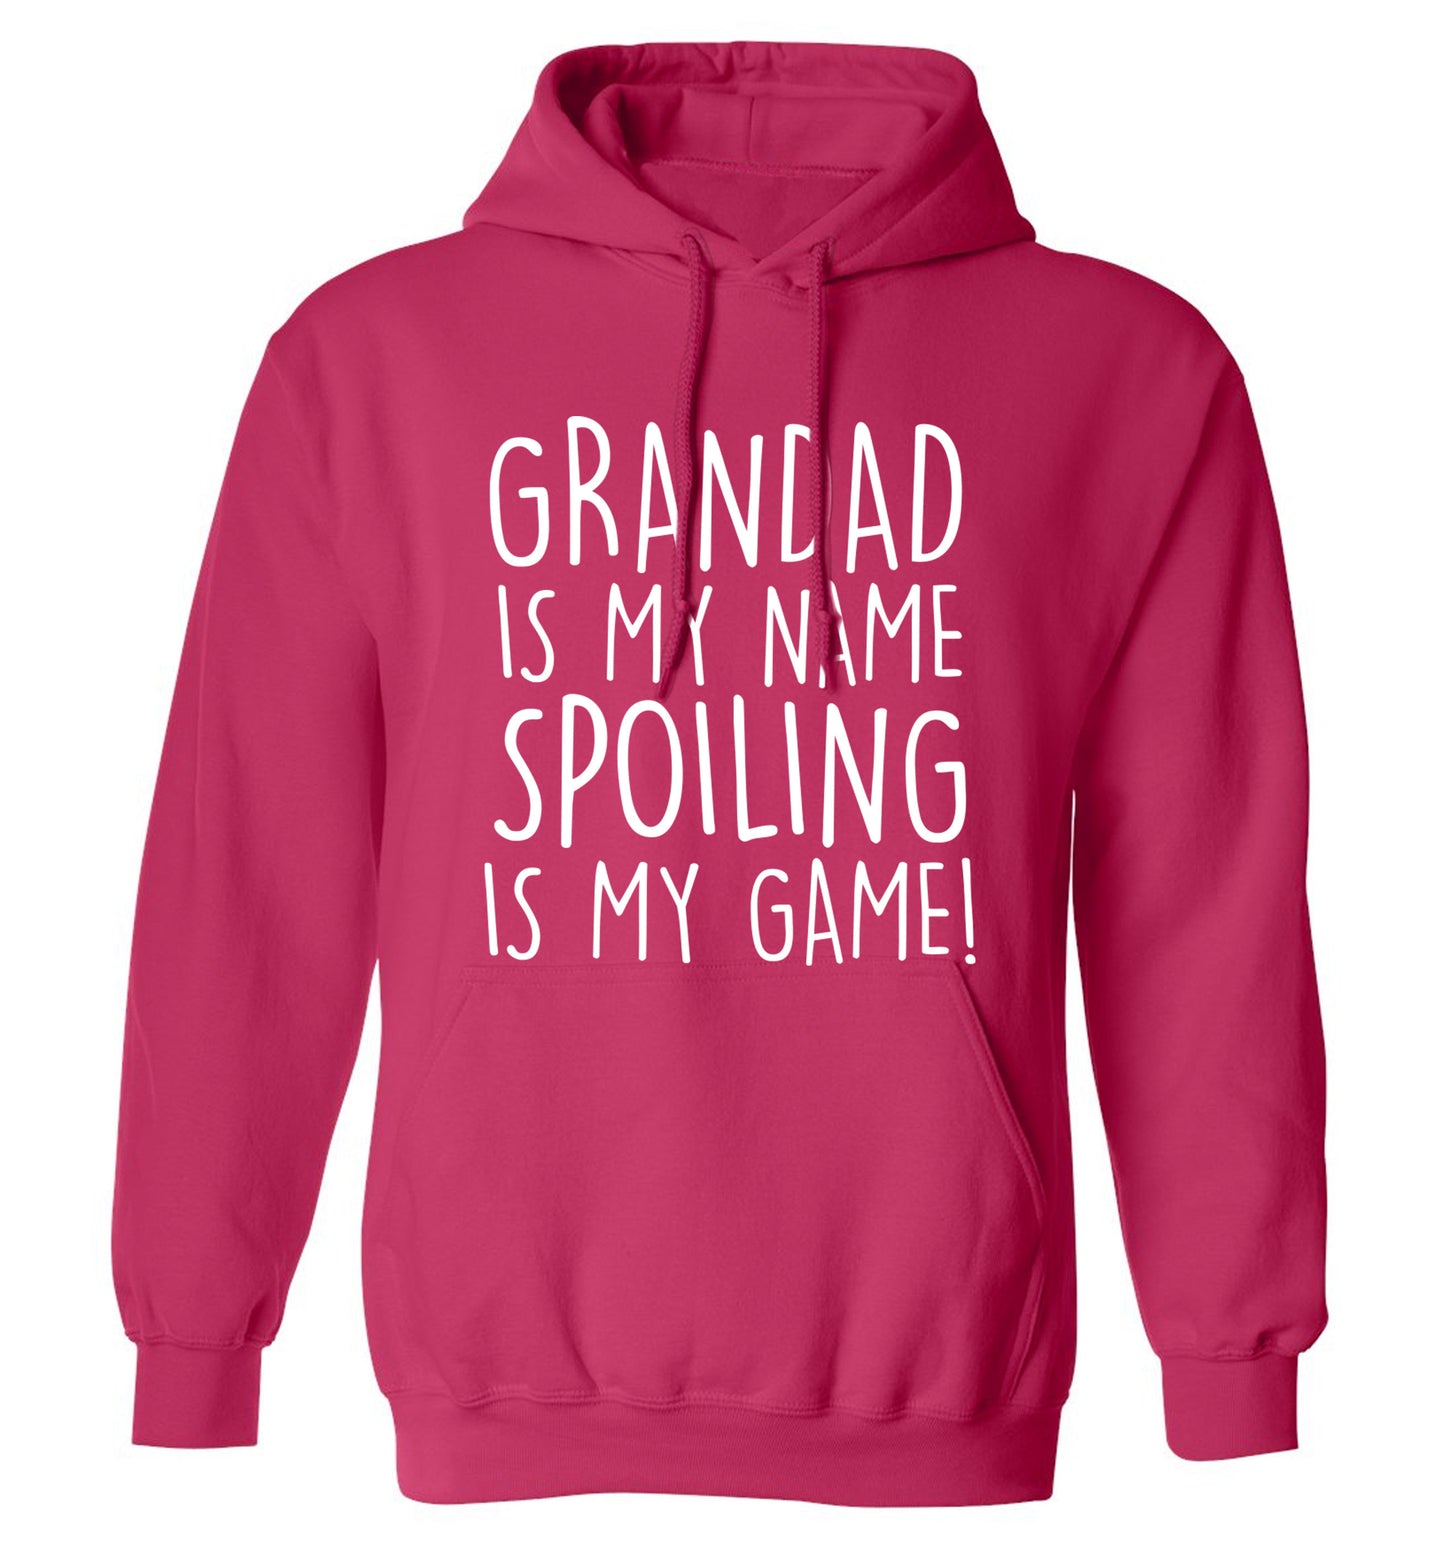 Grandad is my name, spoiling is my game adults unisex pink hoodie 2XL